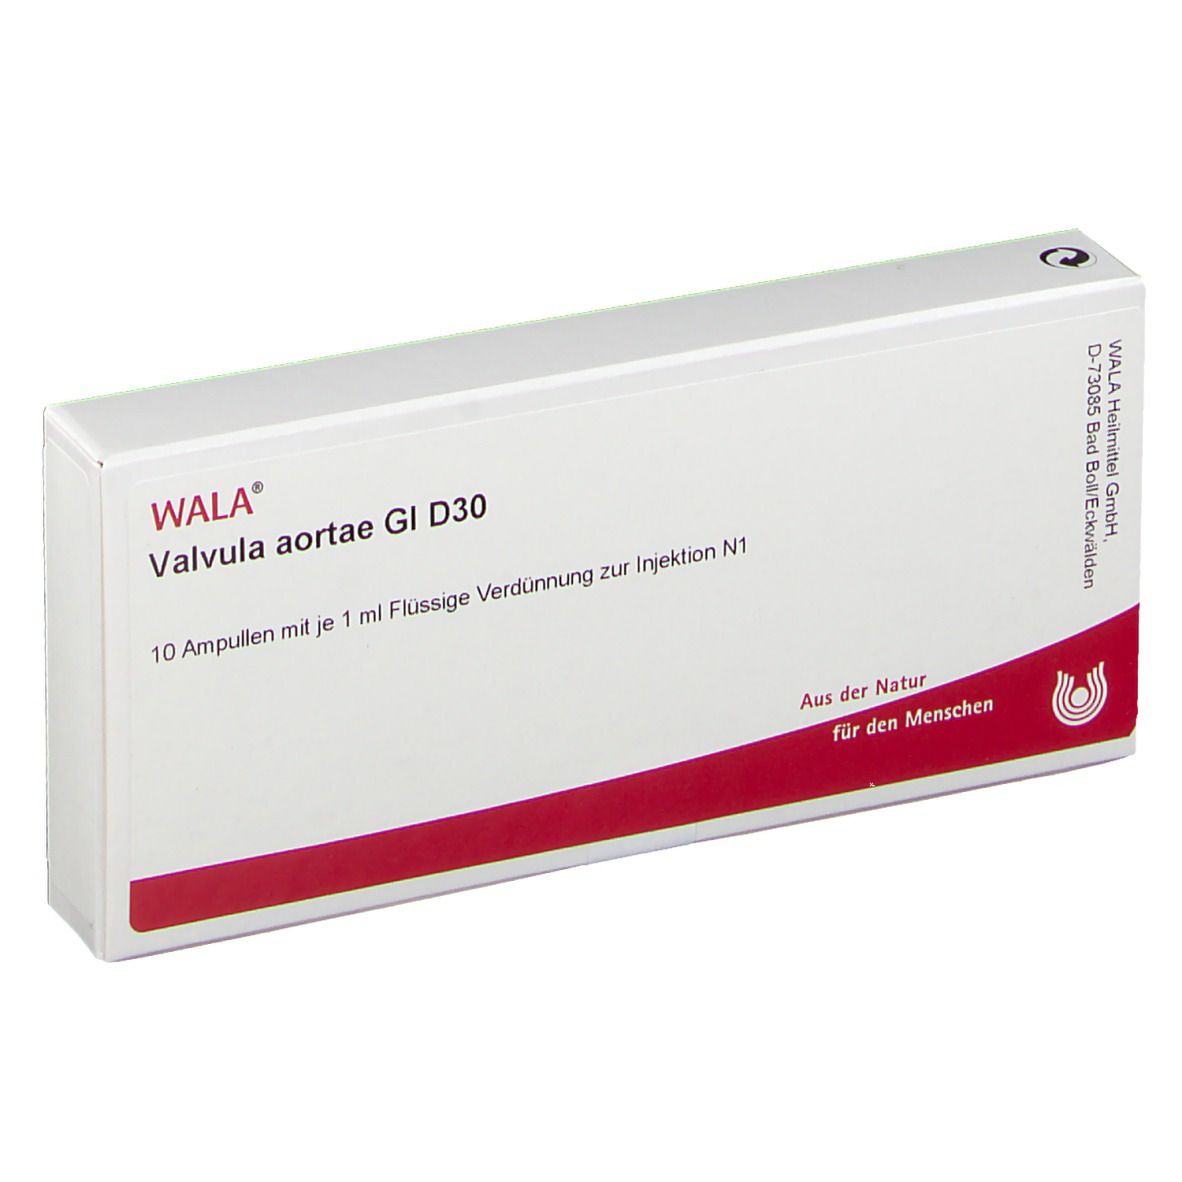 WALA® Valvula aortae Gl D 30